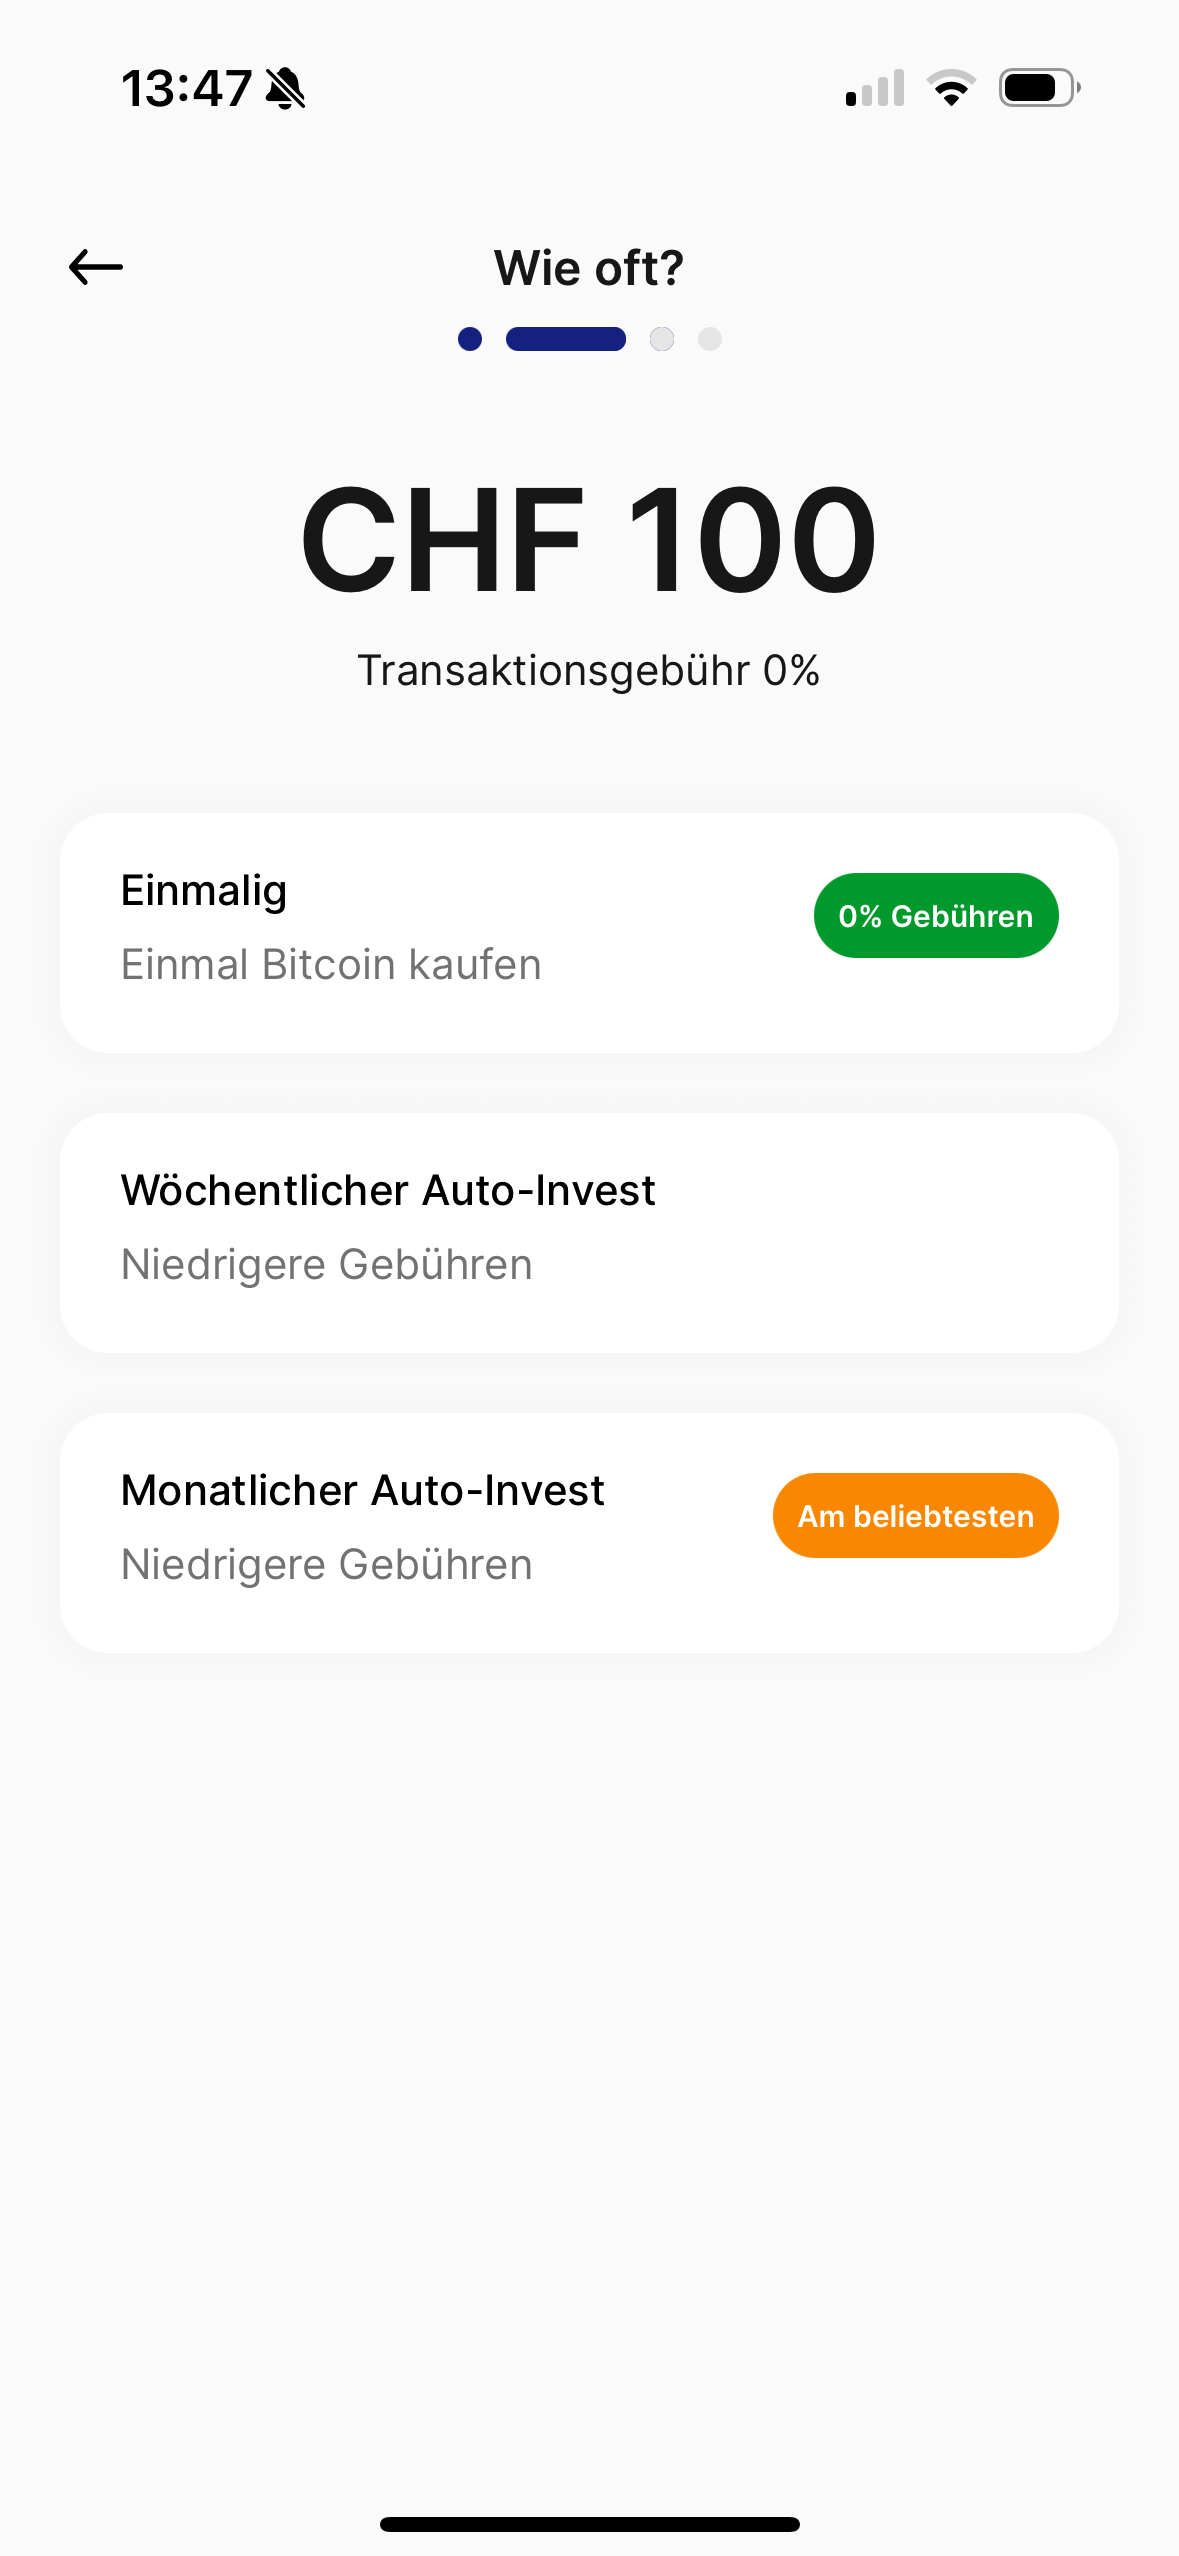 relai app bitcoin app switzerland best crypto app